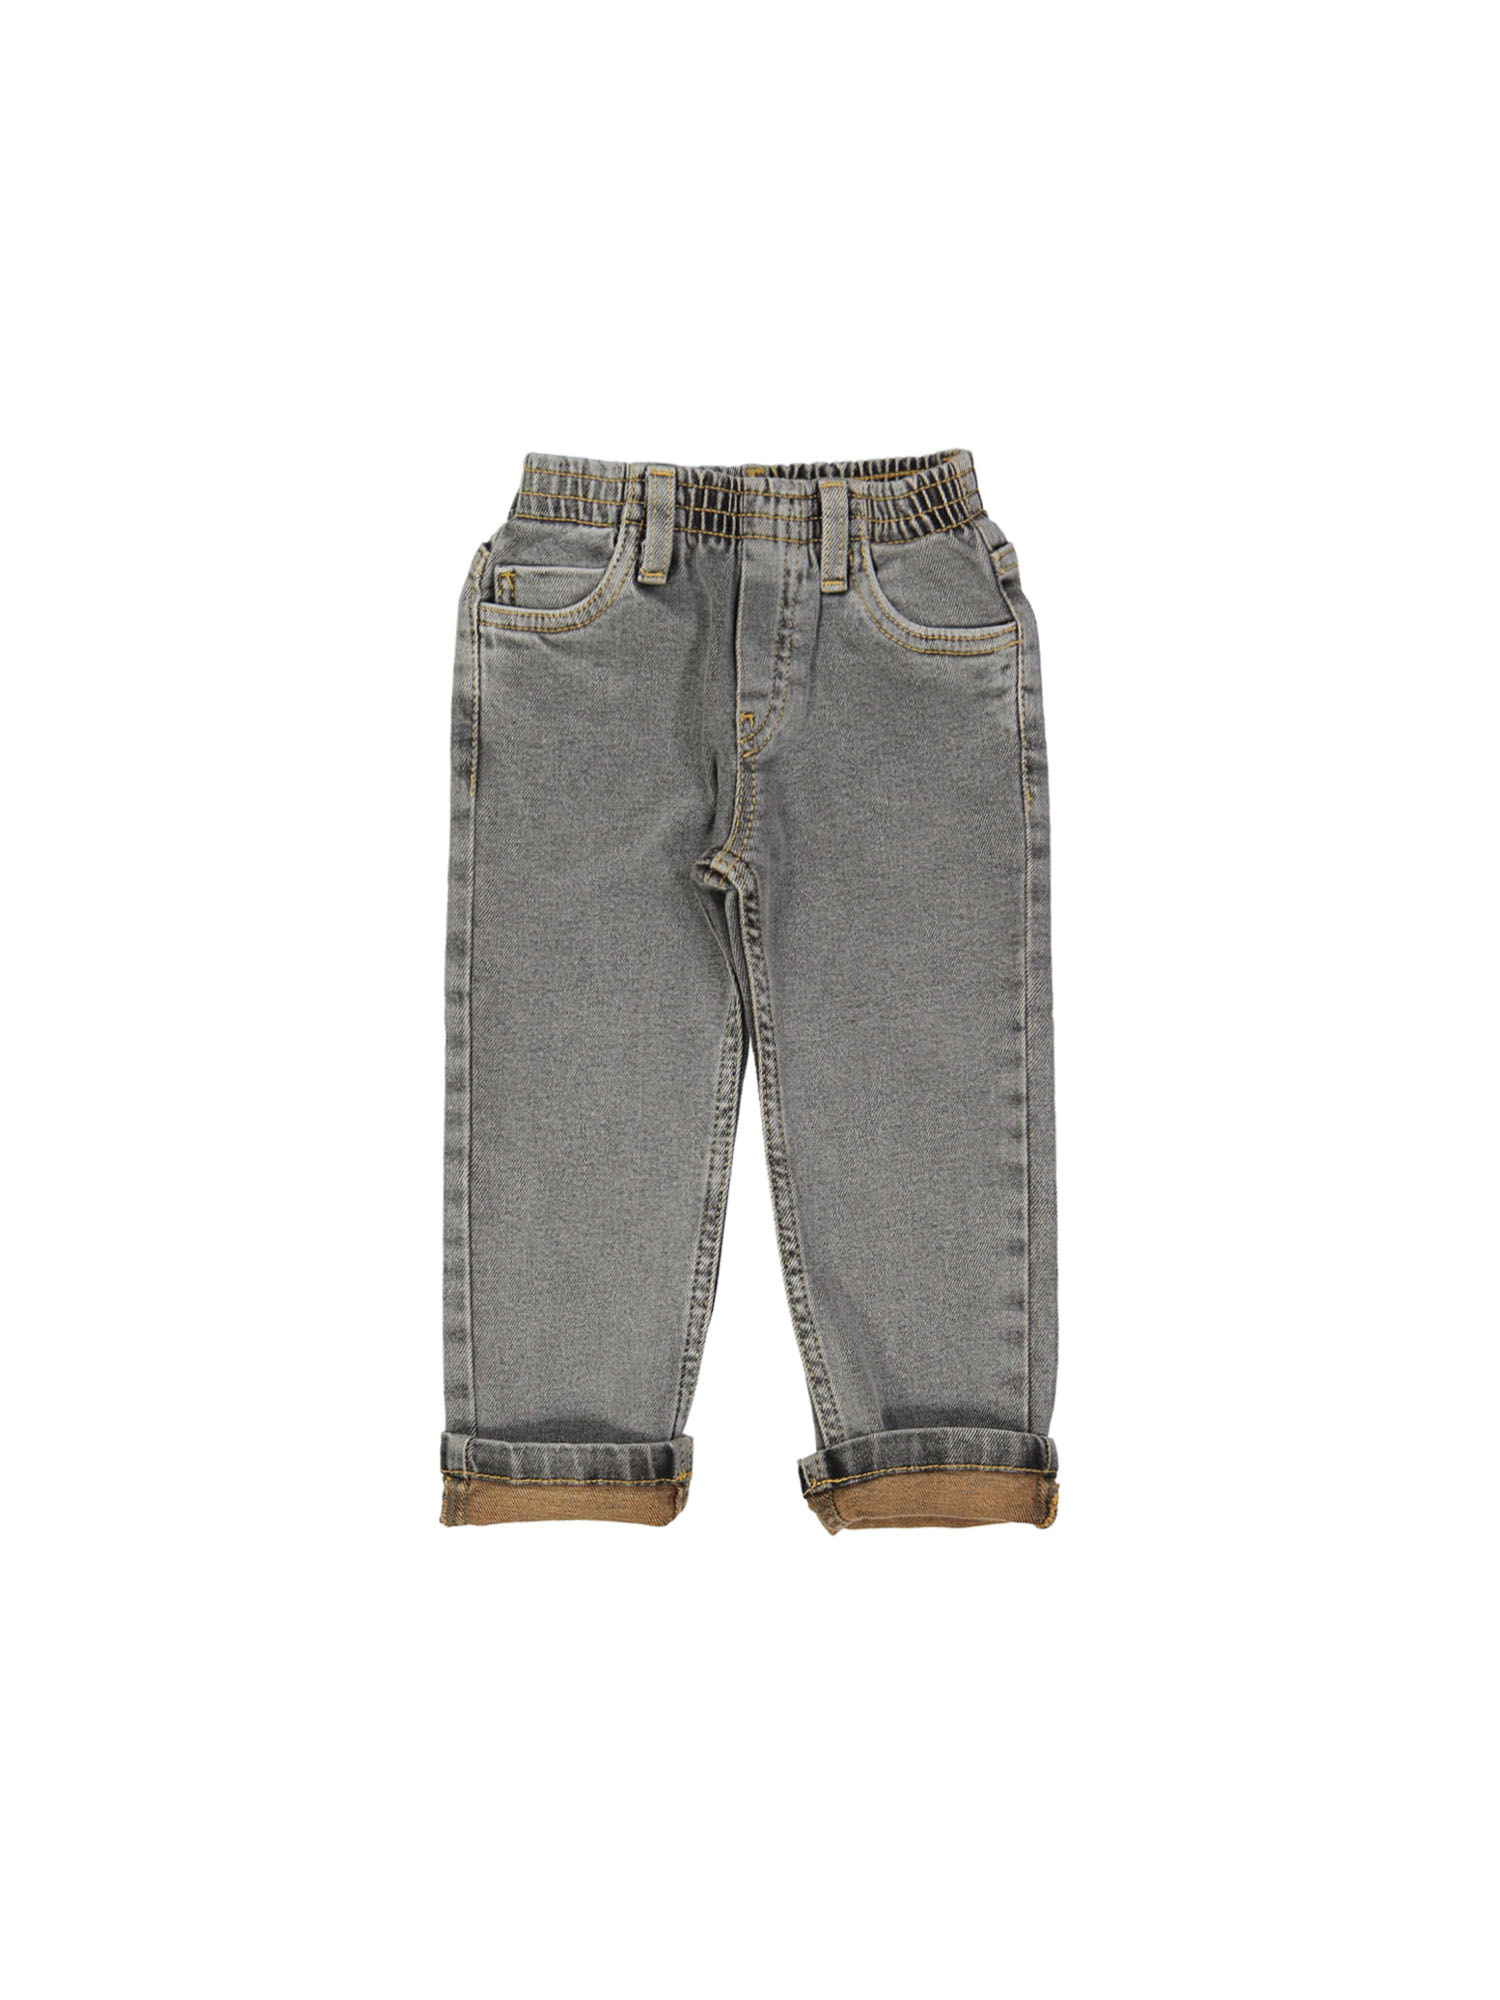 jeans regular rekker grijs 02j